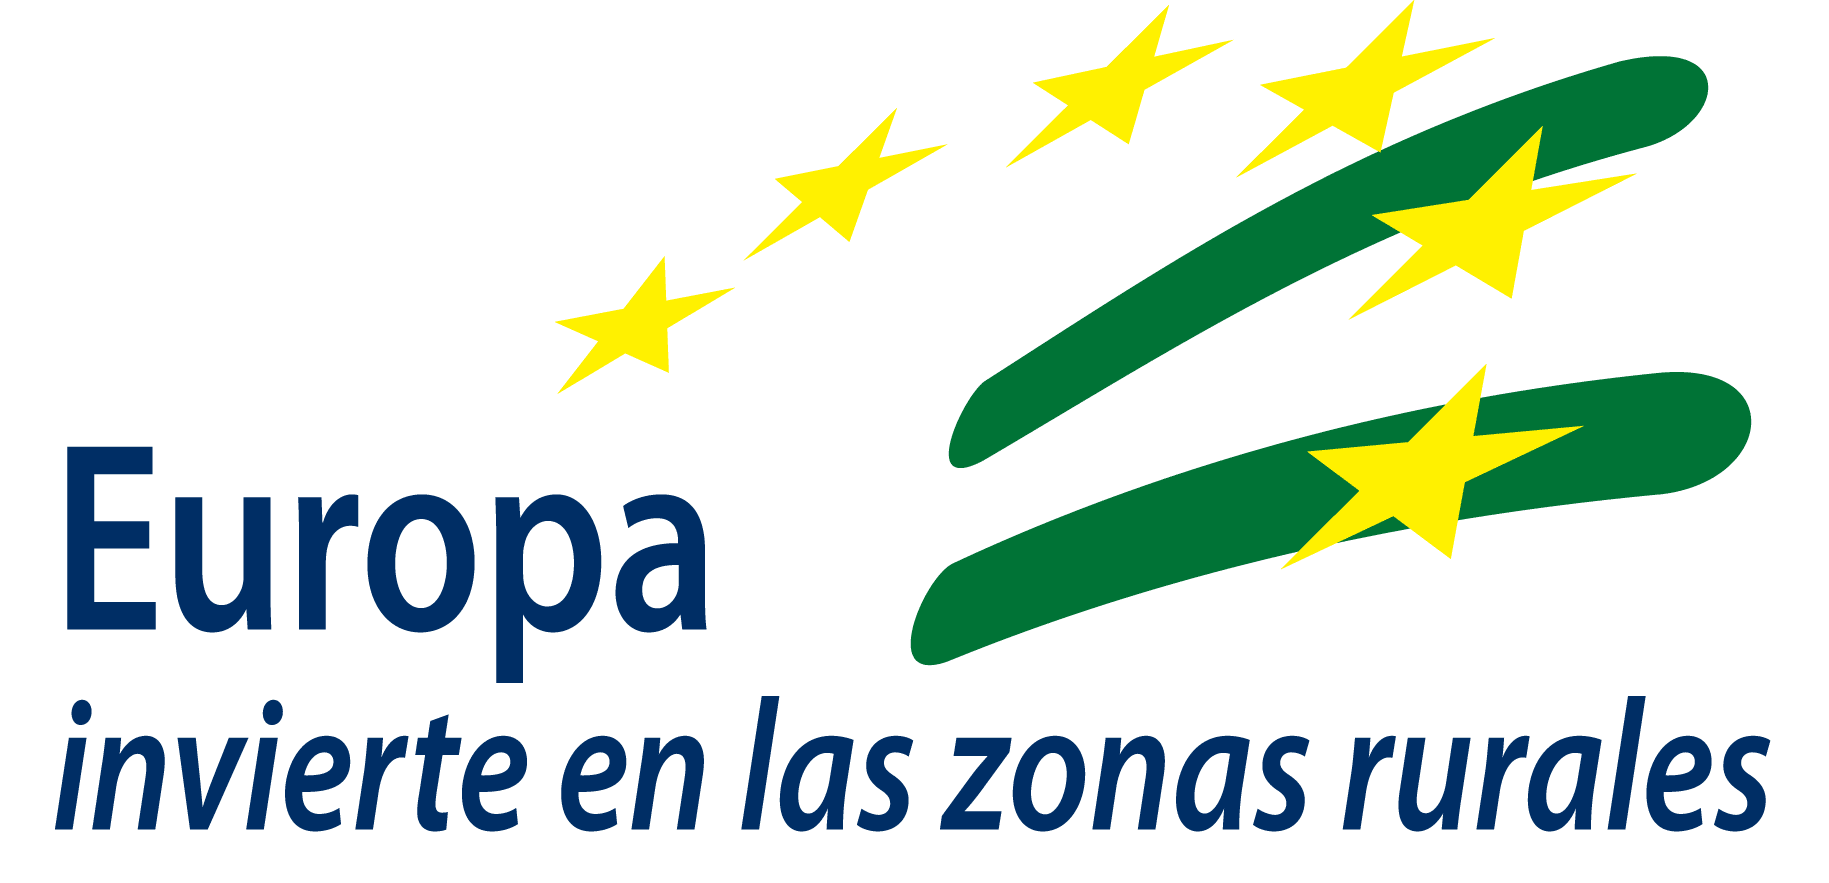 Logo de Europa invierte en zonas rurales